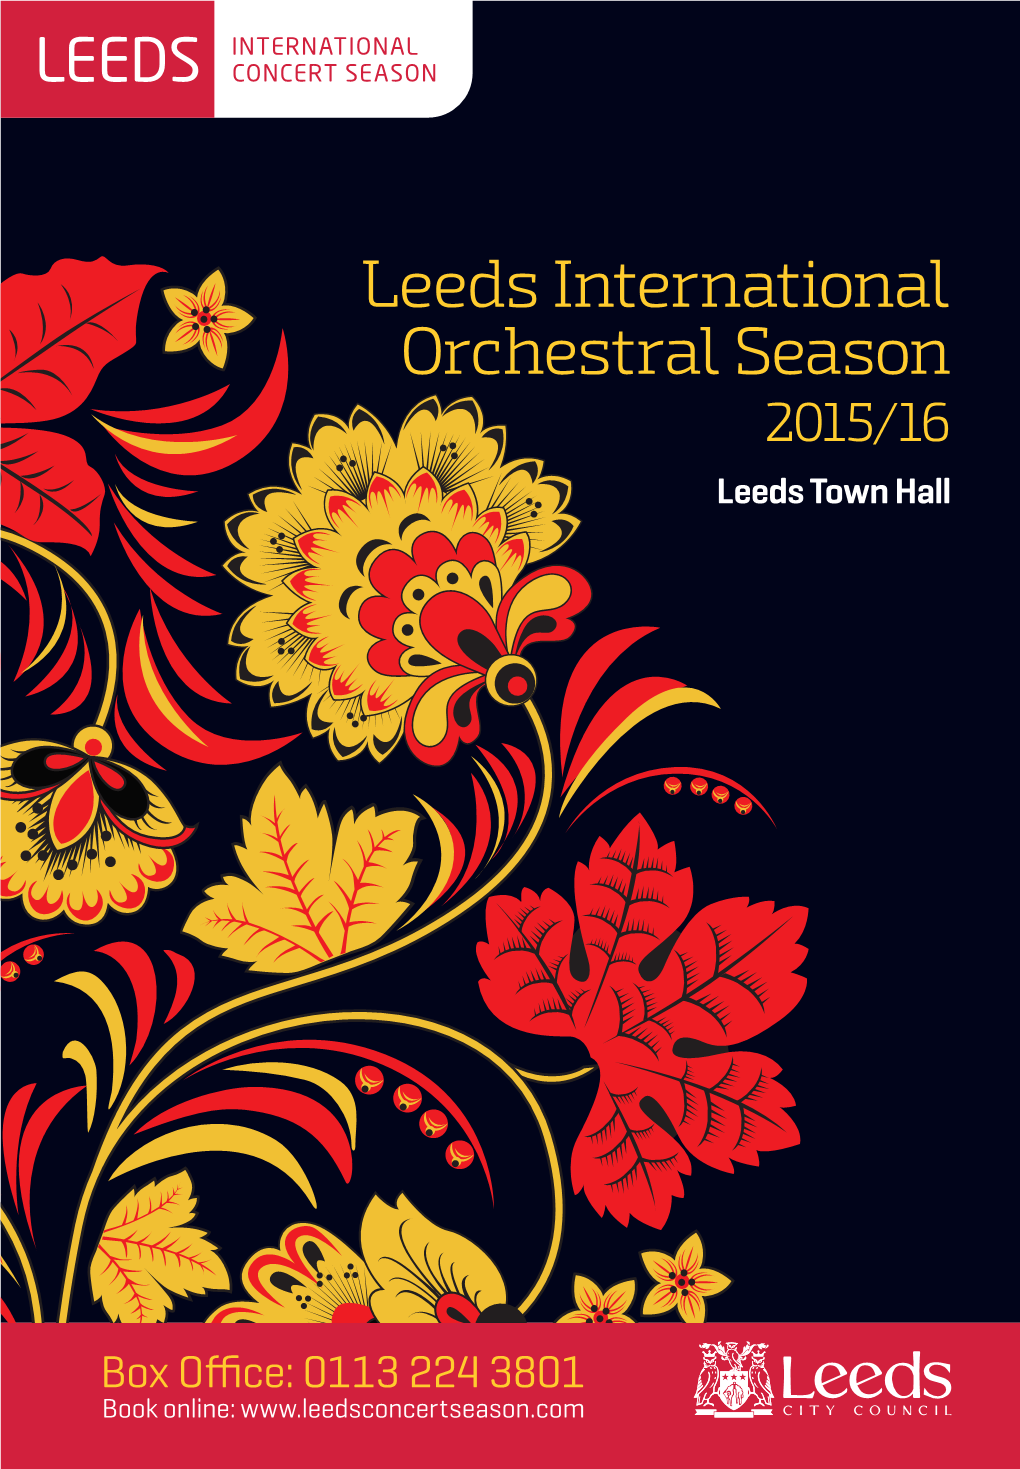 Leeds International Orchestral Season 2015/16 Leeds Town Hall Welcome to Leeds International Leeds Orchestral Season International 2015/16 Concert